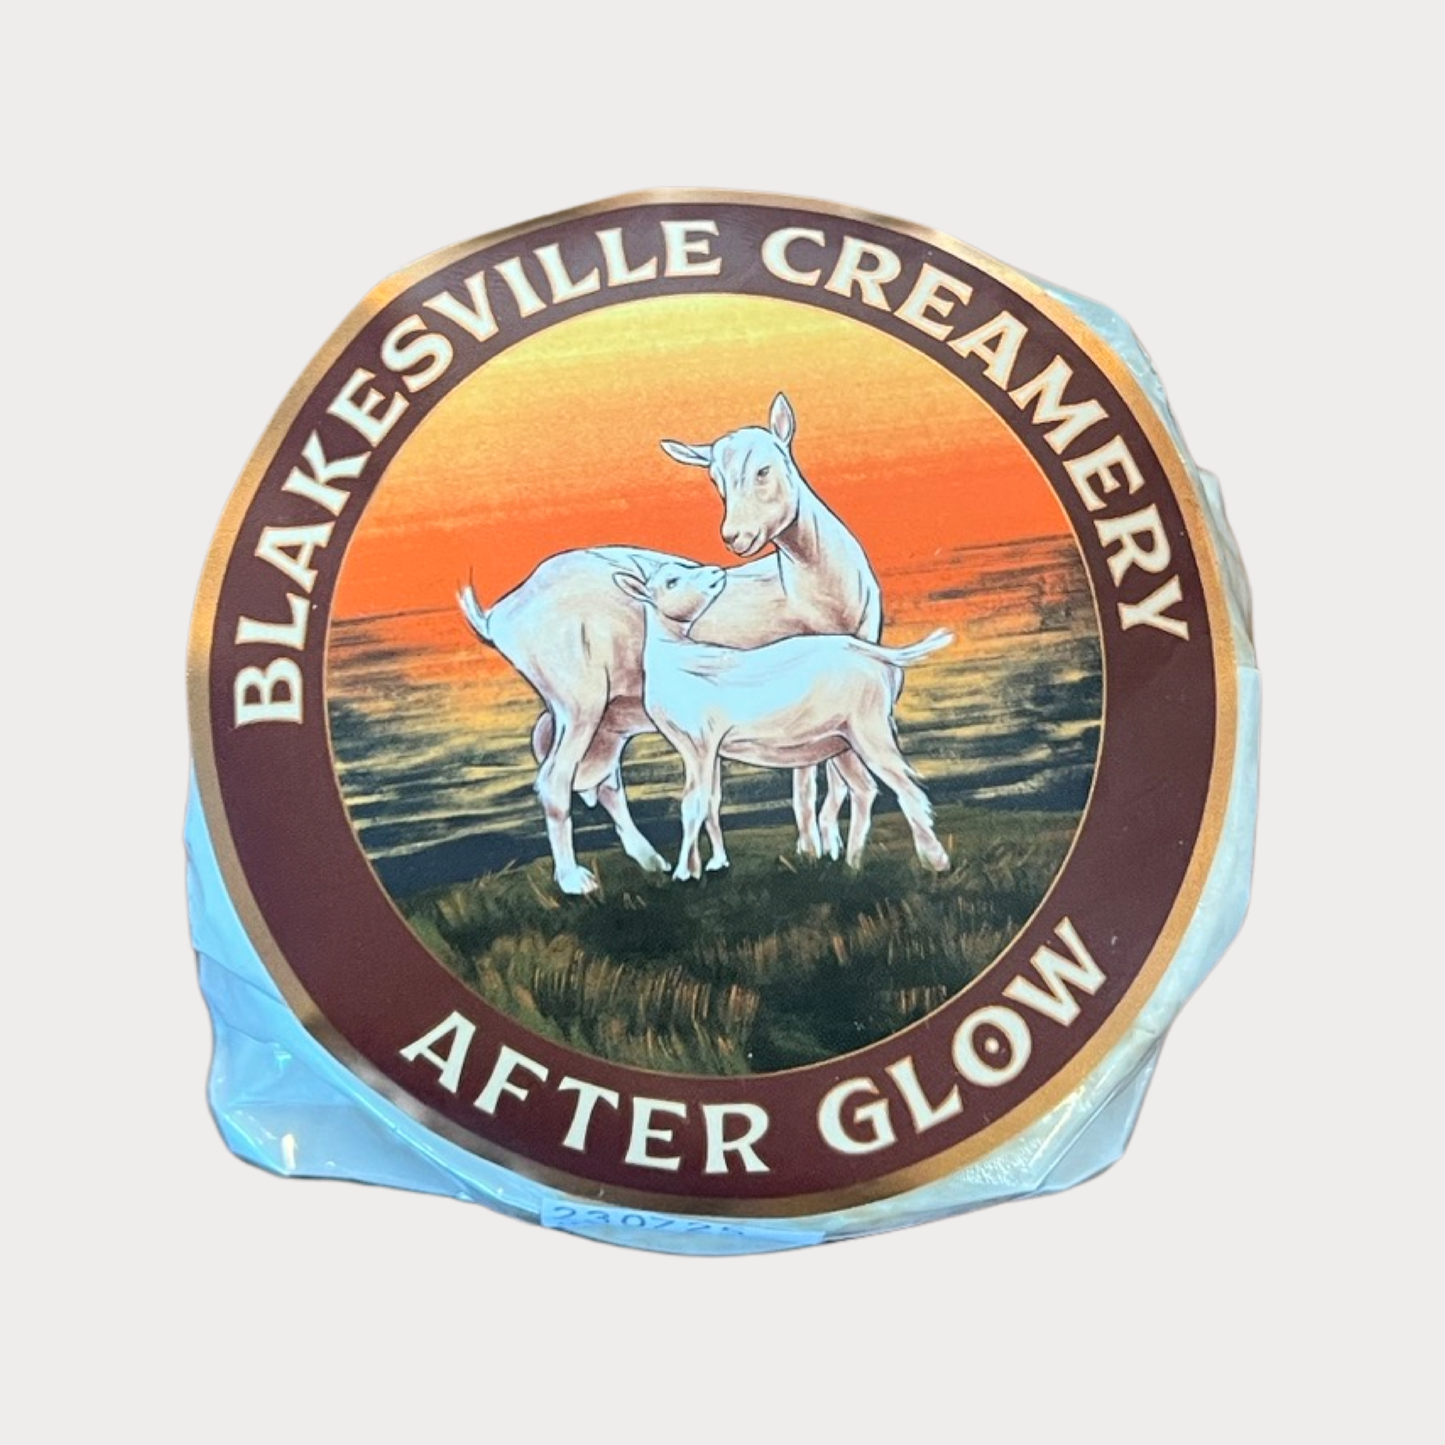 Afterglow Blakesville Creamery